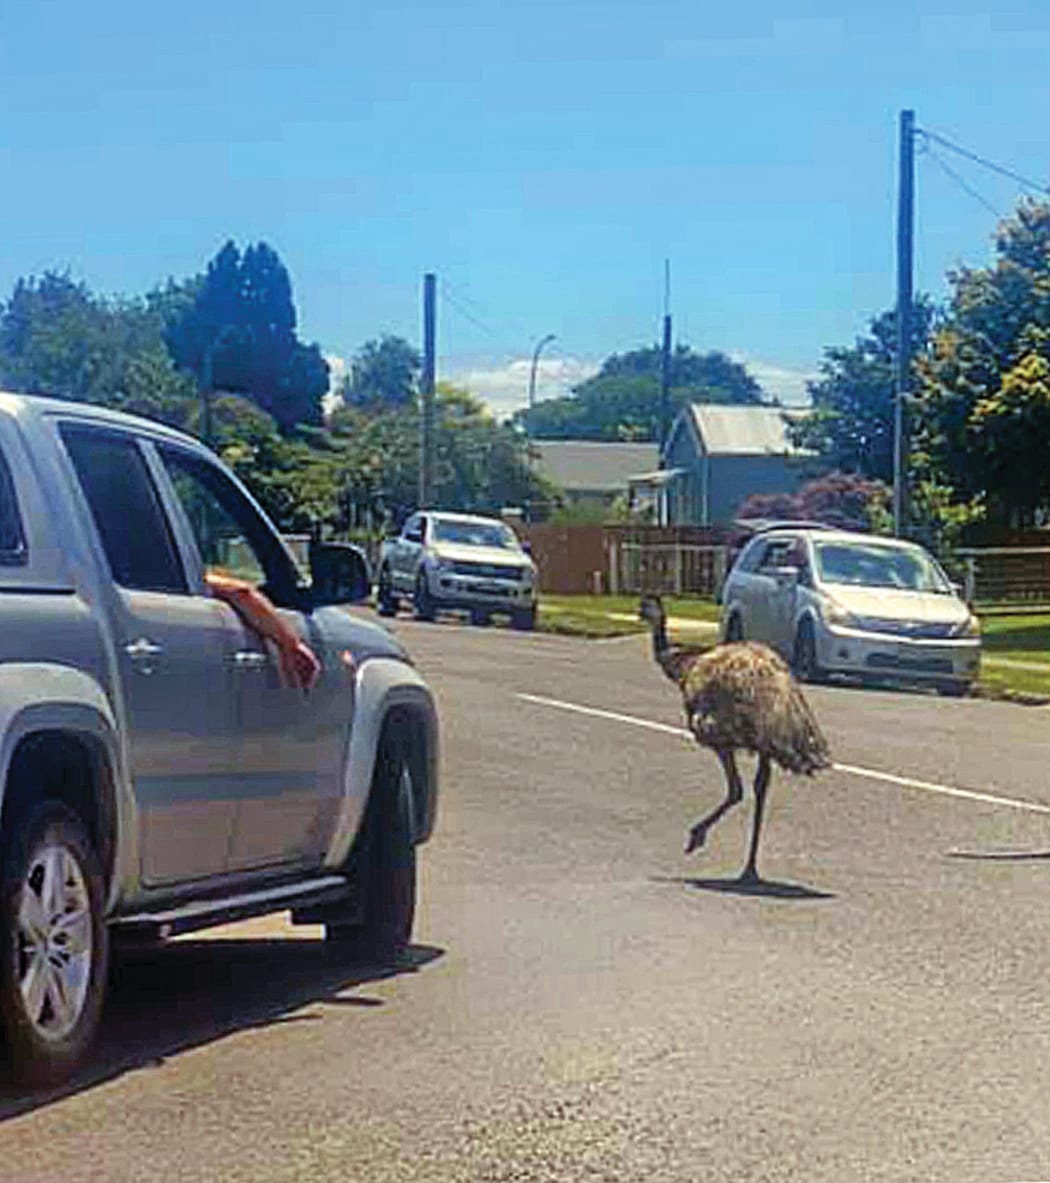 The emu stopped traffic and thankfully wasn't hurt on its hīkoi around town.